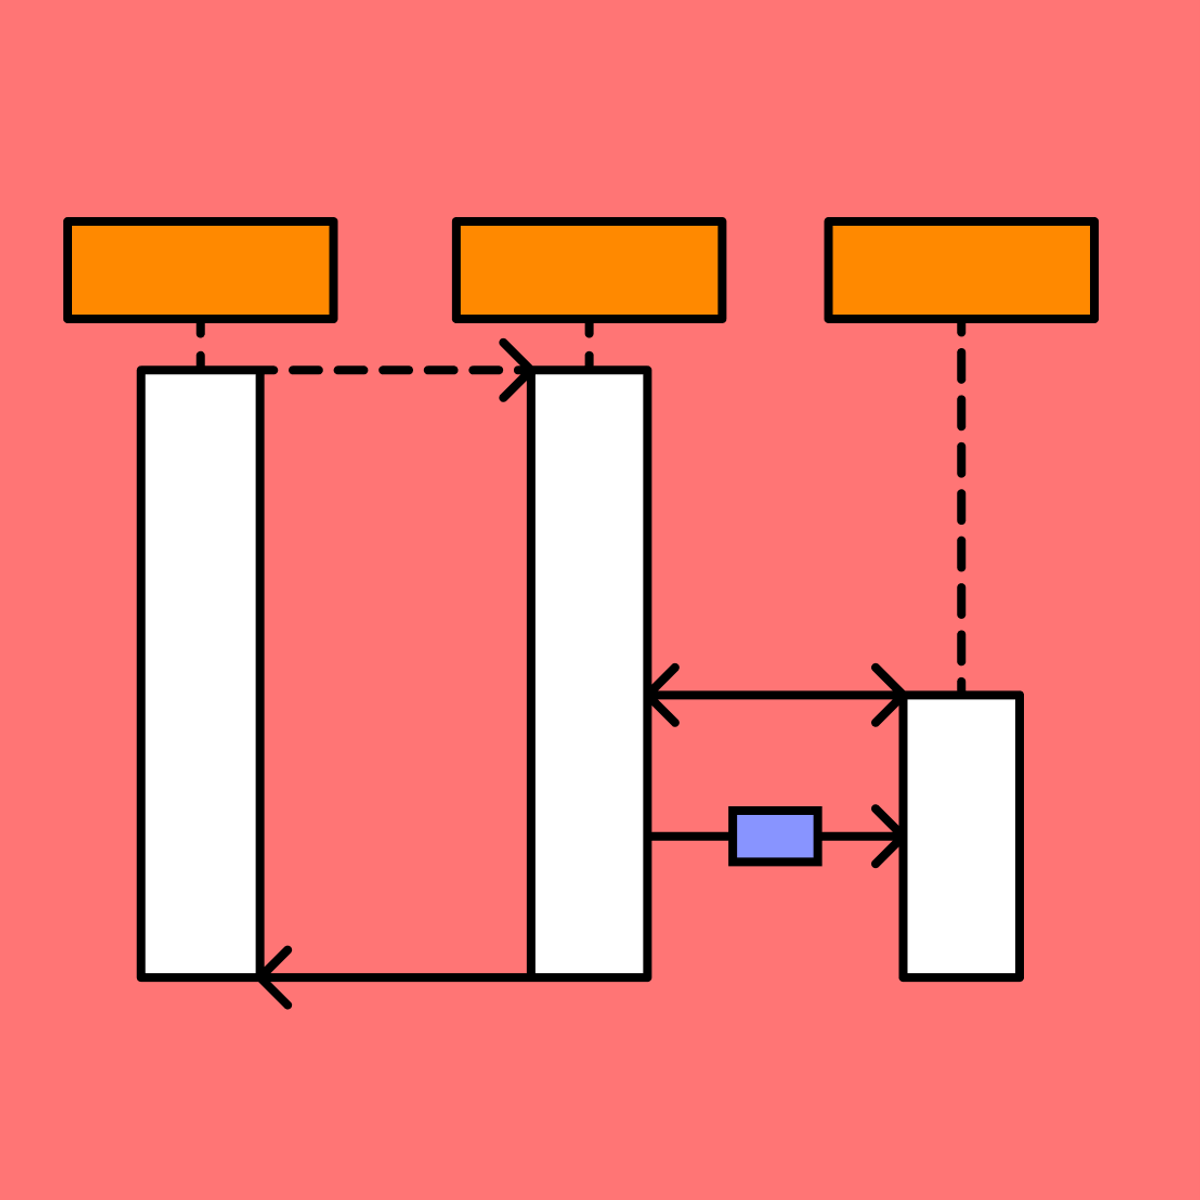 Create Sequence Diagram